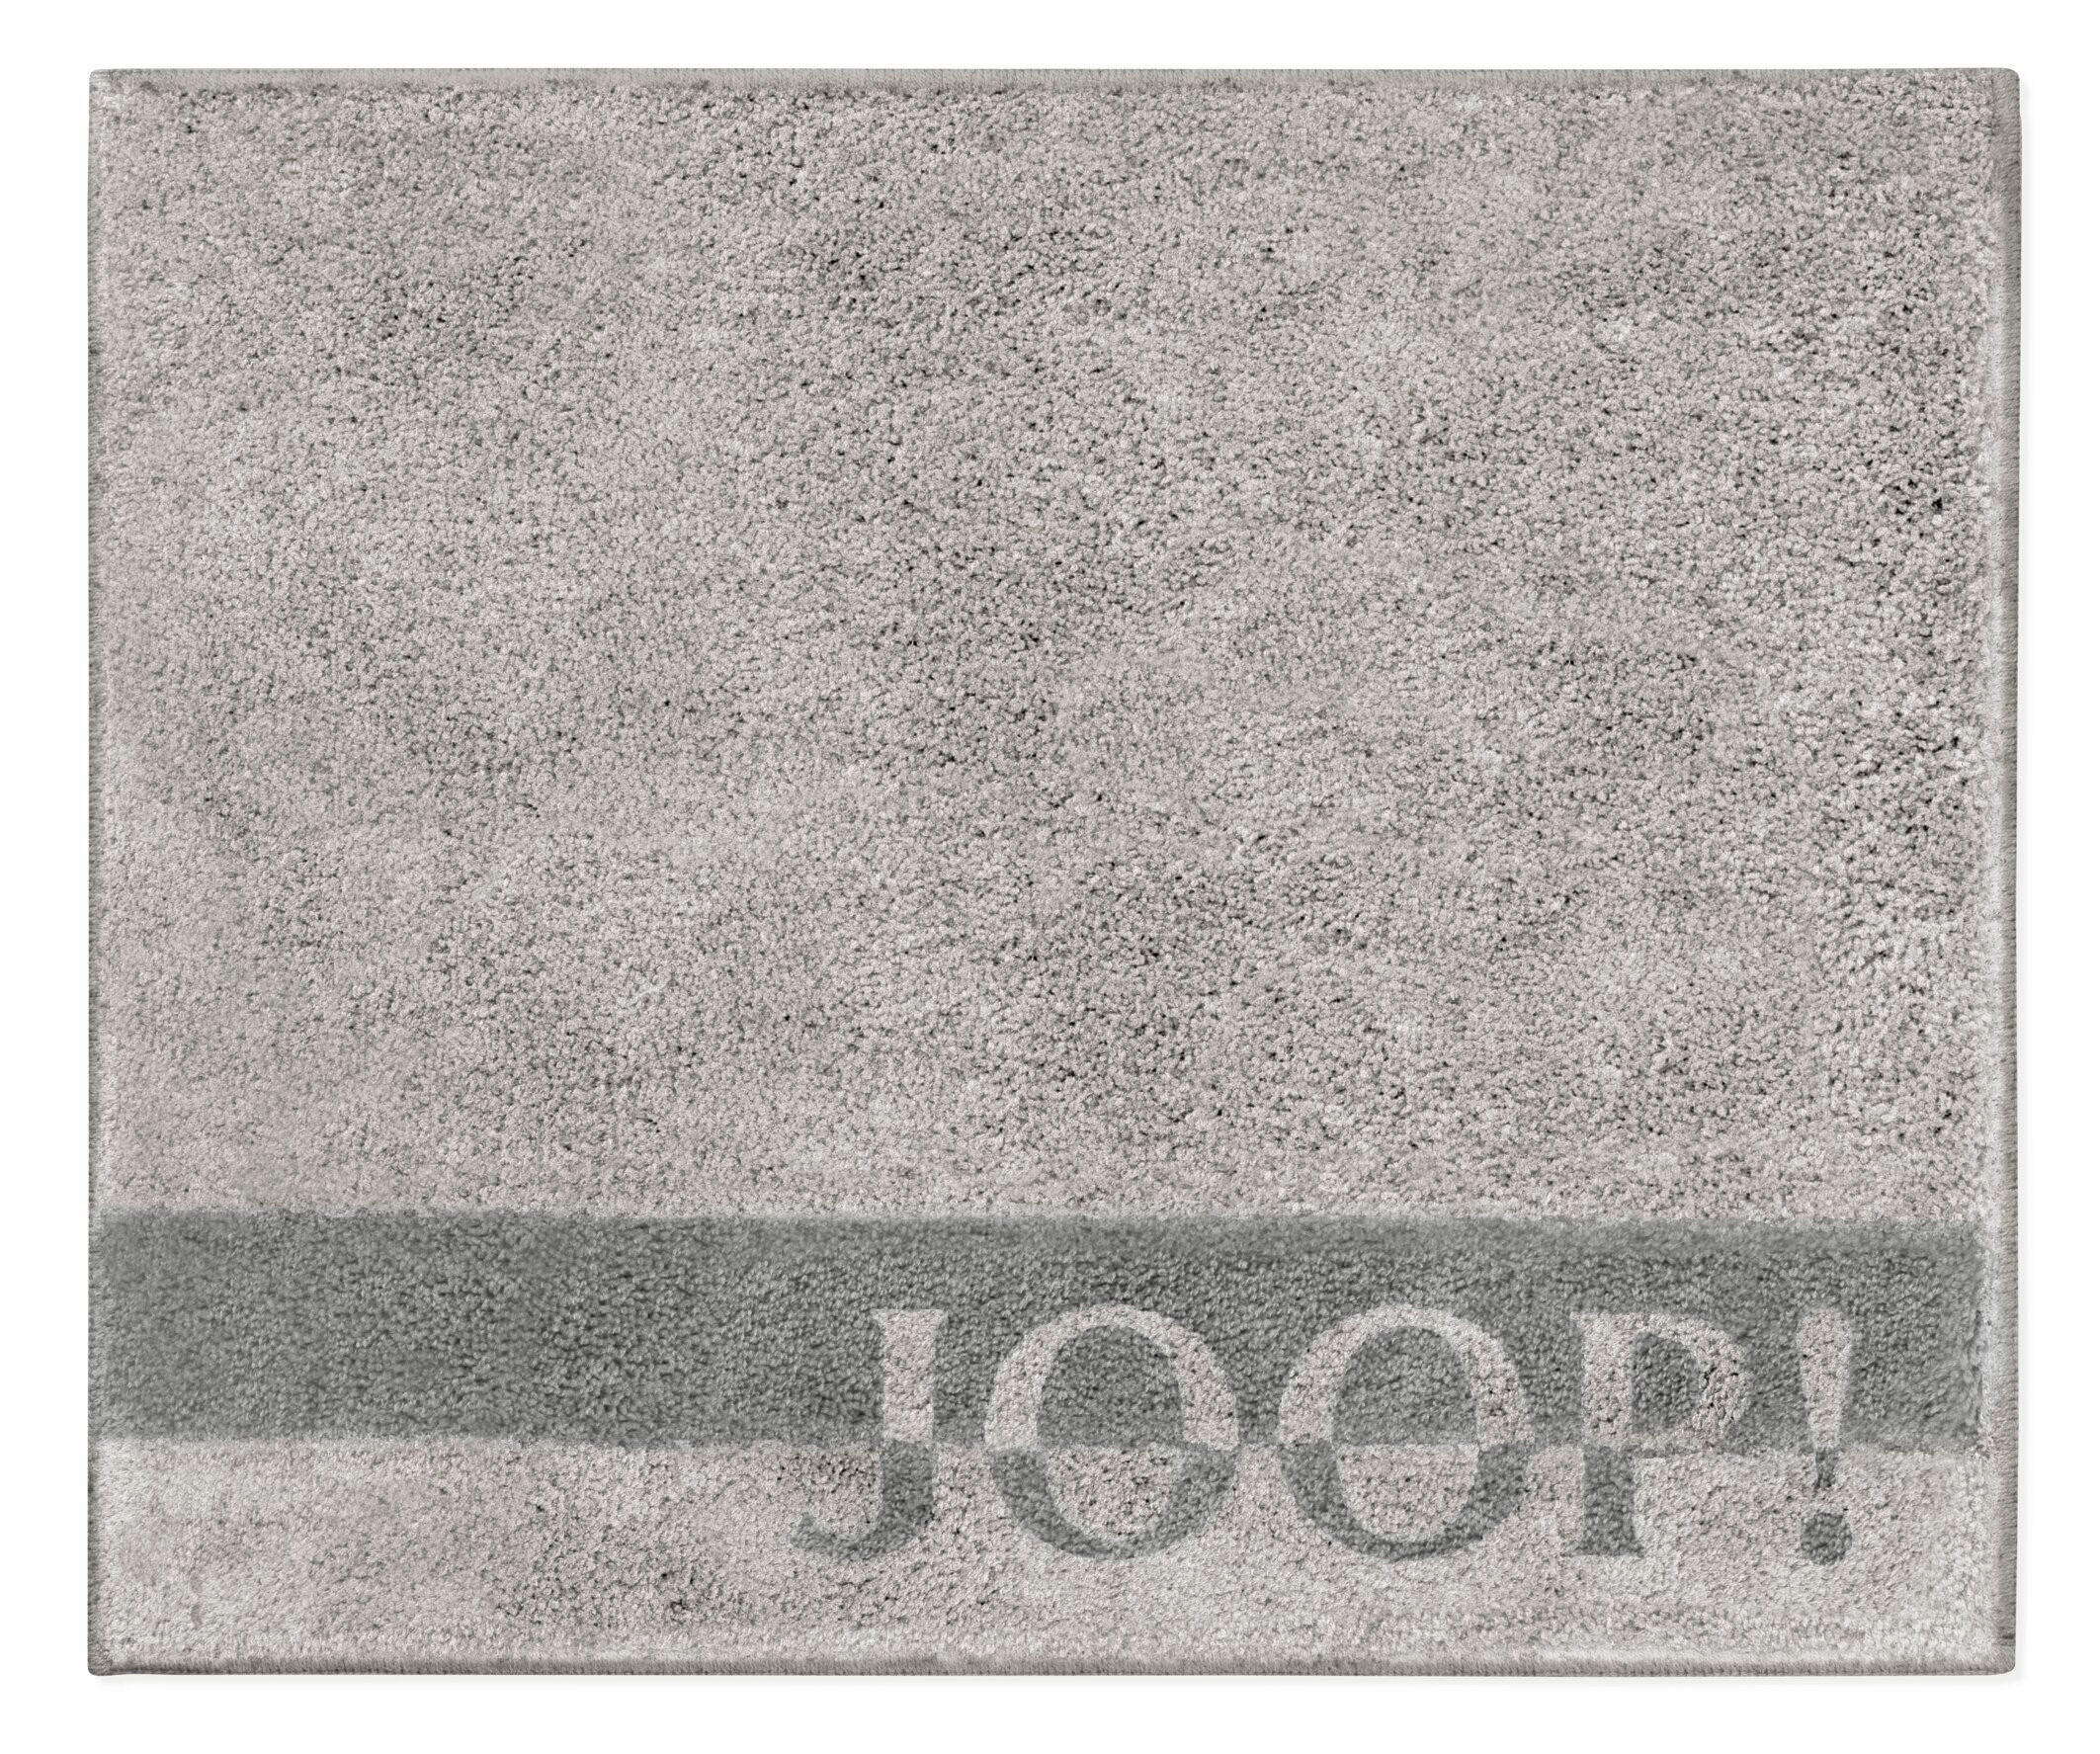 BADTEPPICH  LOGO STRIPES 50/60 cm  - Grau, Basics, Textil (50/60cm) - Joop!